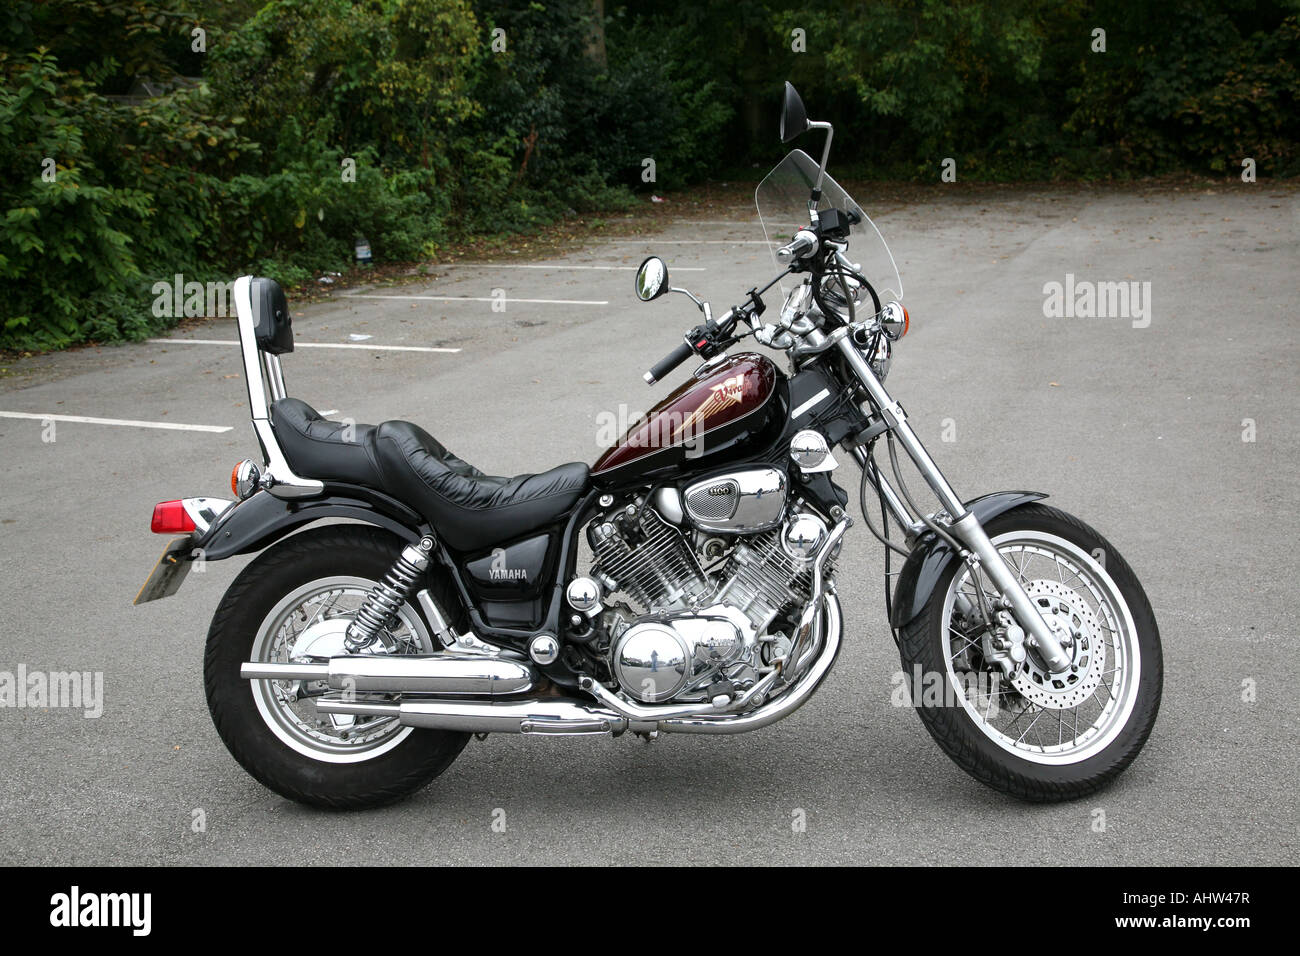 A Yamaha Virago 1100 Motorcycle. Stock Photo